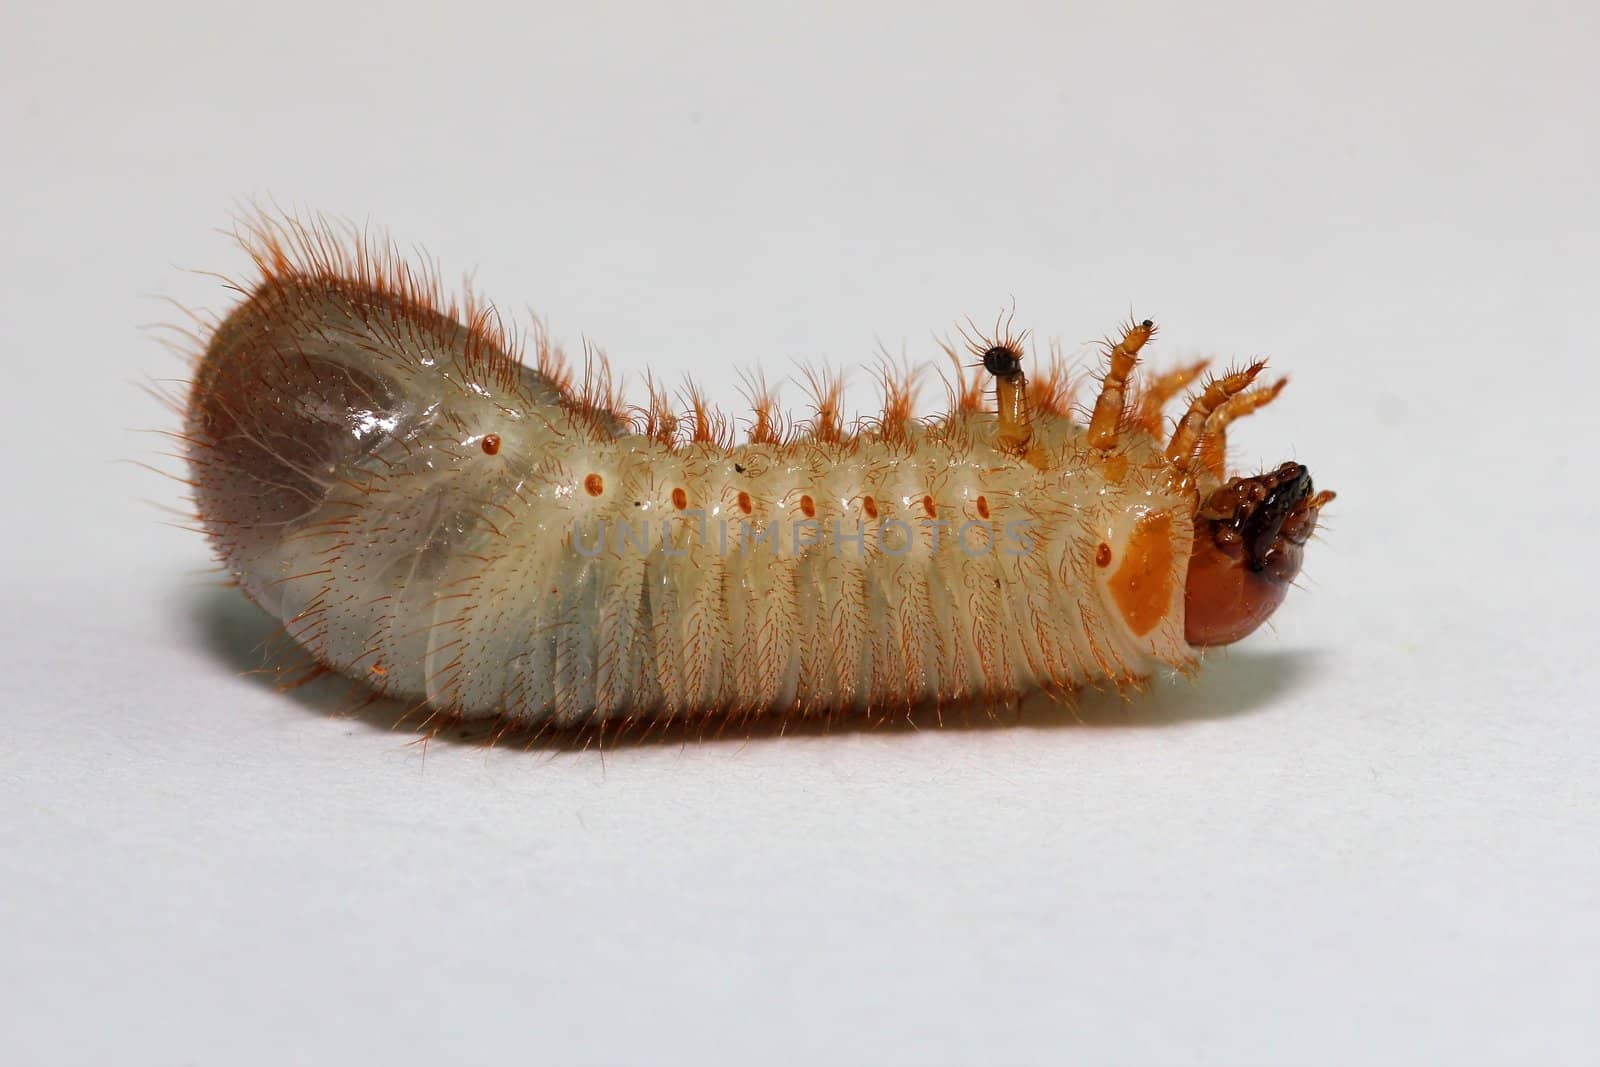 Hermit Beetle larva (Osmoderma eremita) on white background